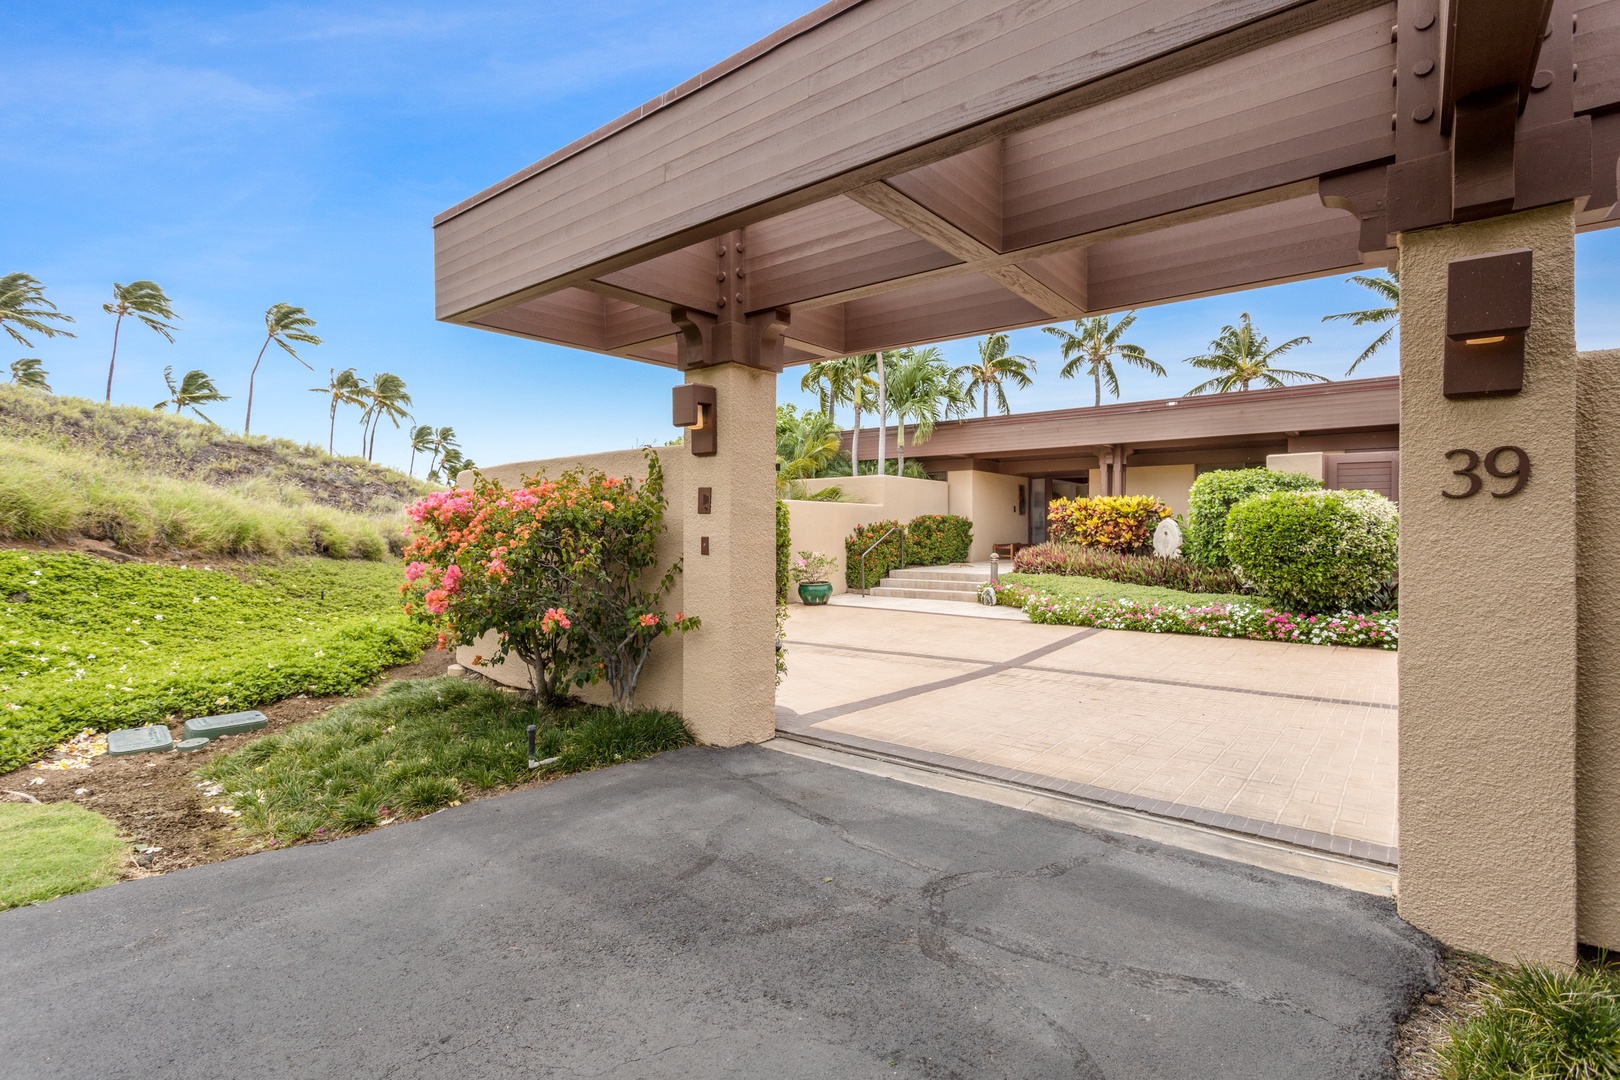 Kamuela Vacation Rentals, 3BD Villas (39) at Mauna Kea Resort - Villa 39 gated private entrance highlighting prime corner location.